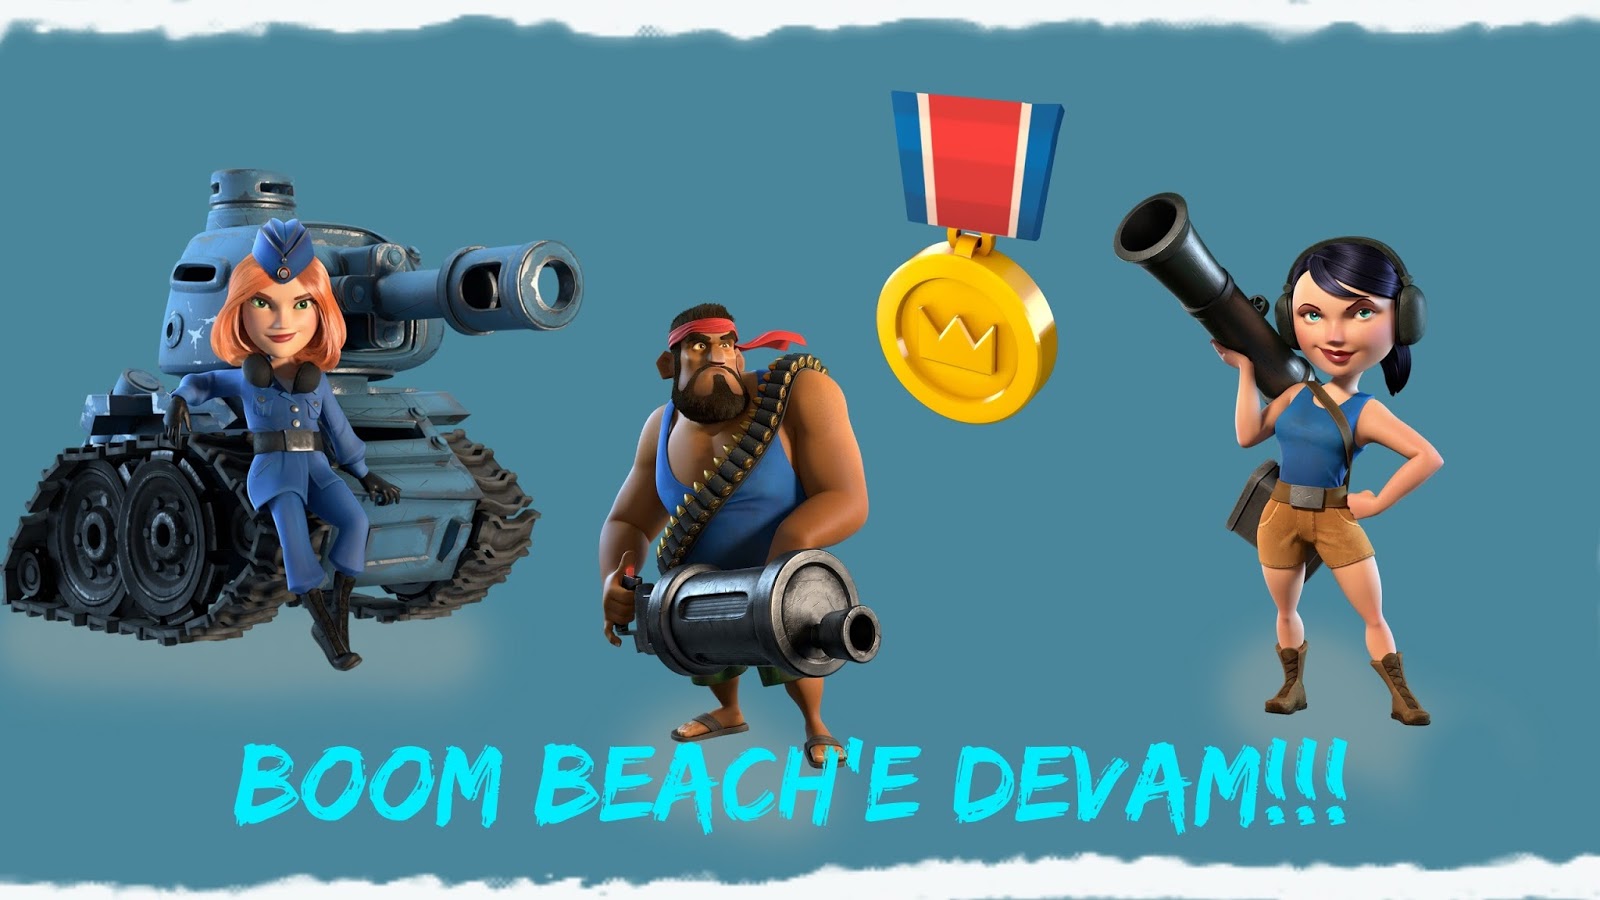 Boom Beach Attack Strategy* for "BIG BOYS" Heavies & Grenadie...